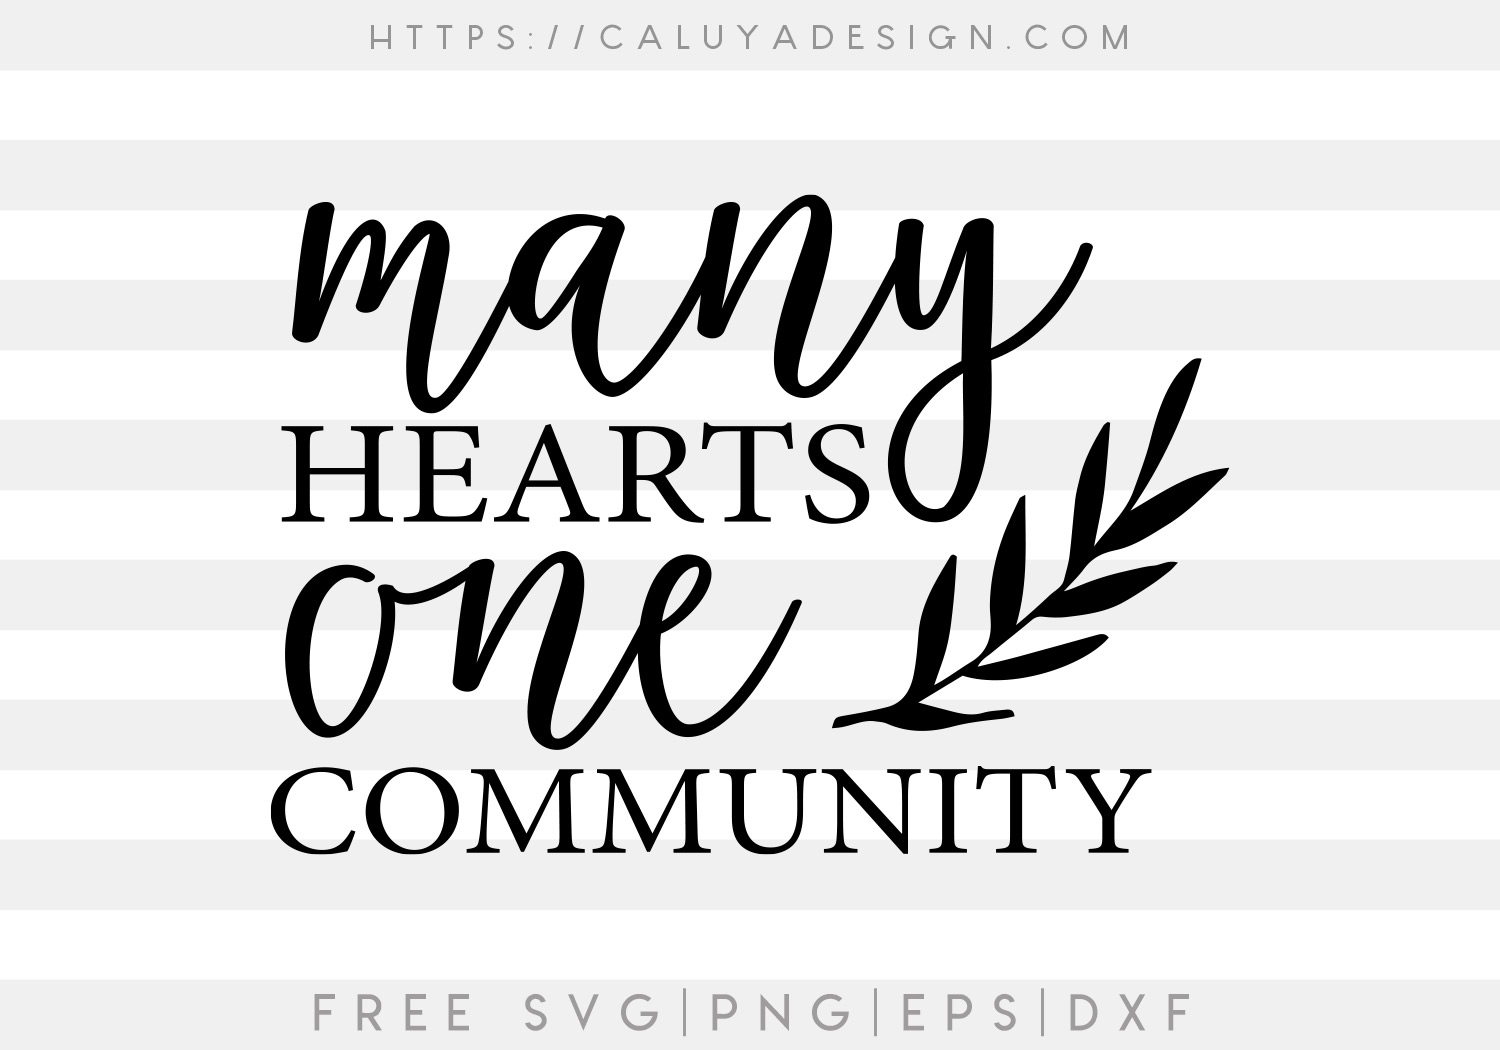 Free Many Hearts One Community SVG Cut File